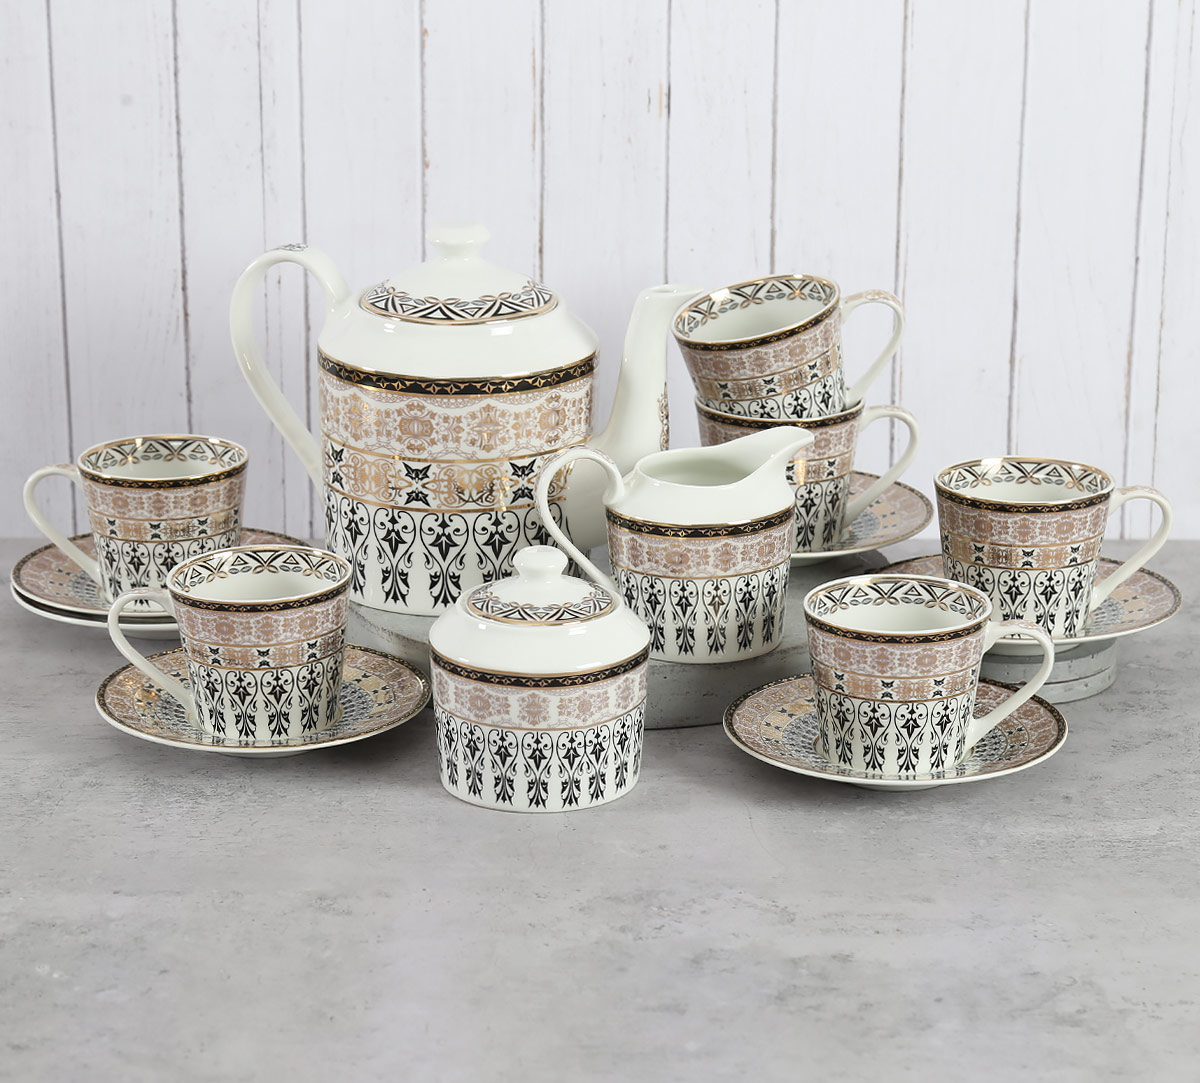 Shop for Tea Cups Sets Online